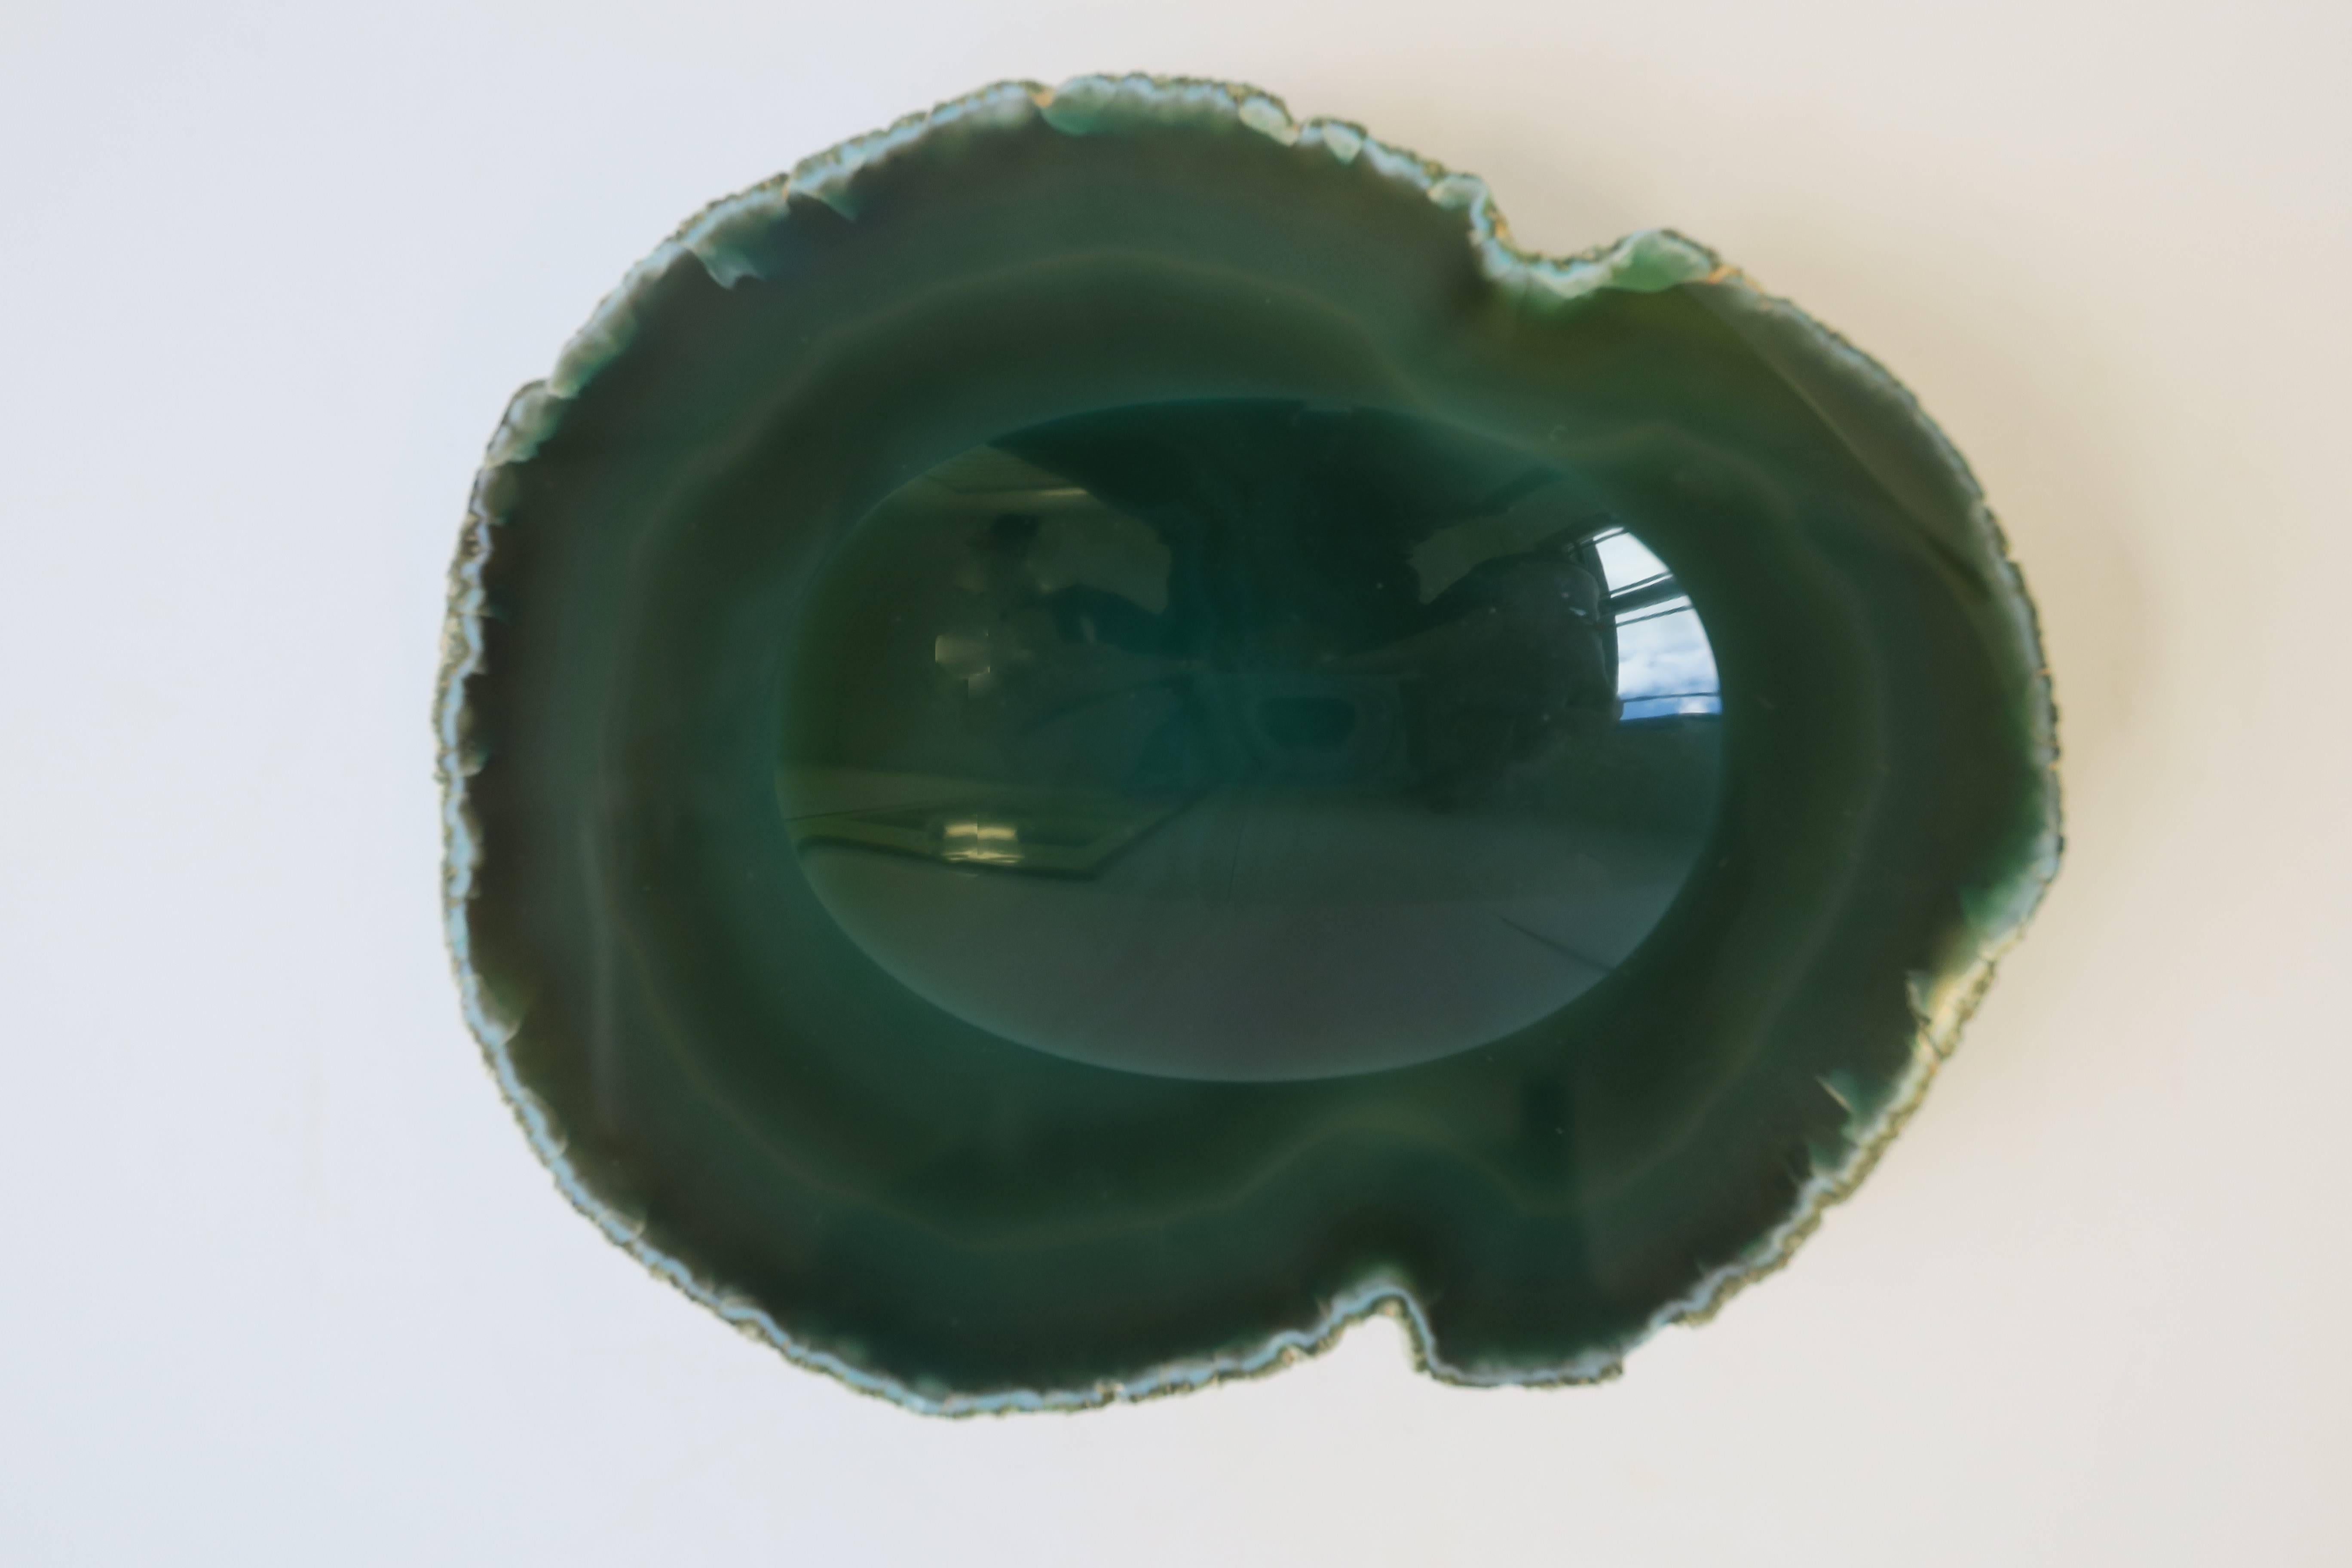 European Vintage Emerald Green Agate Geode Vessel Bowl or Decorative Object